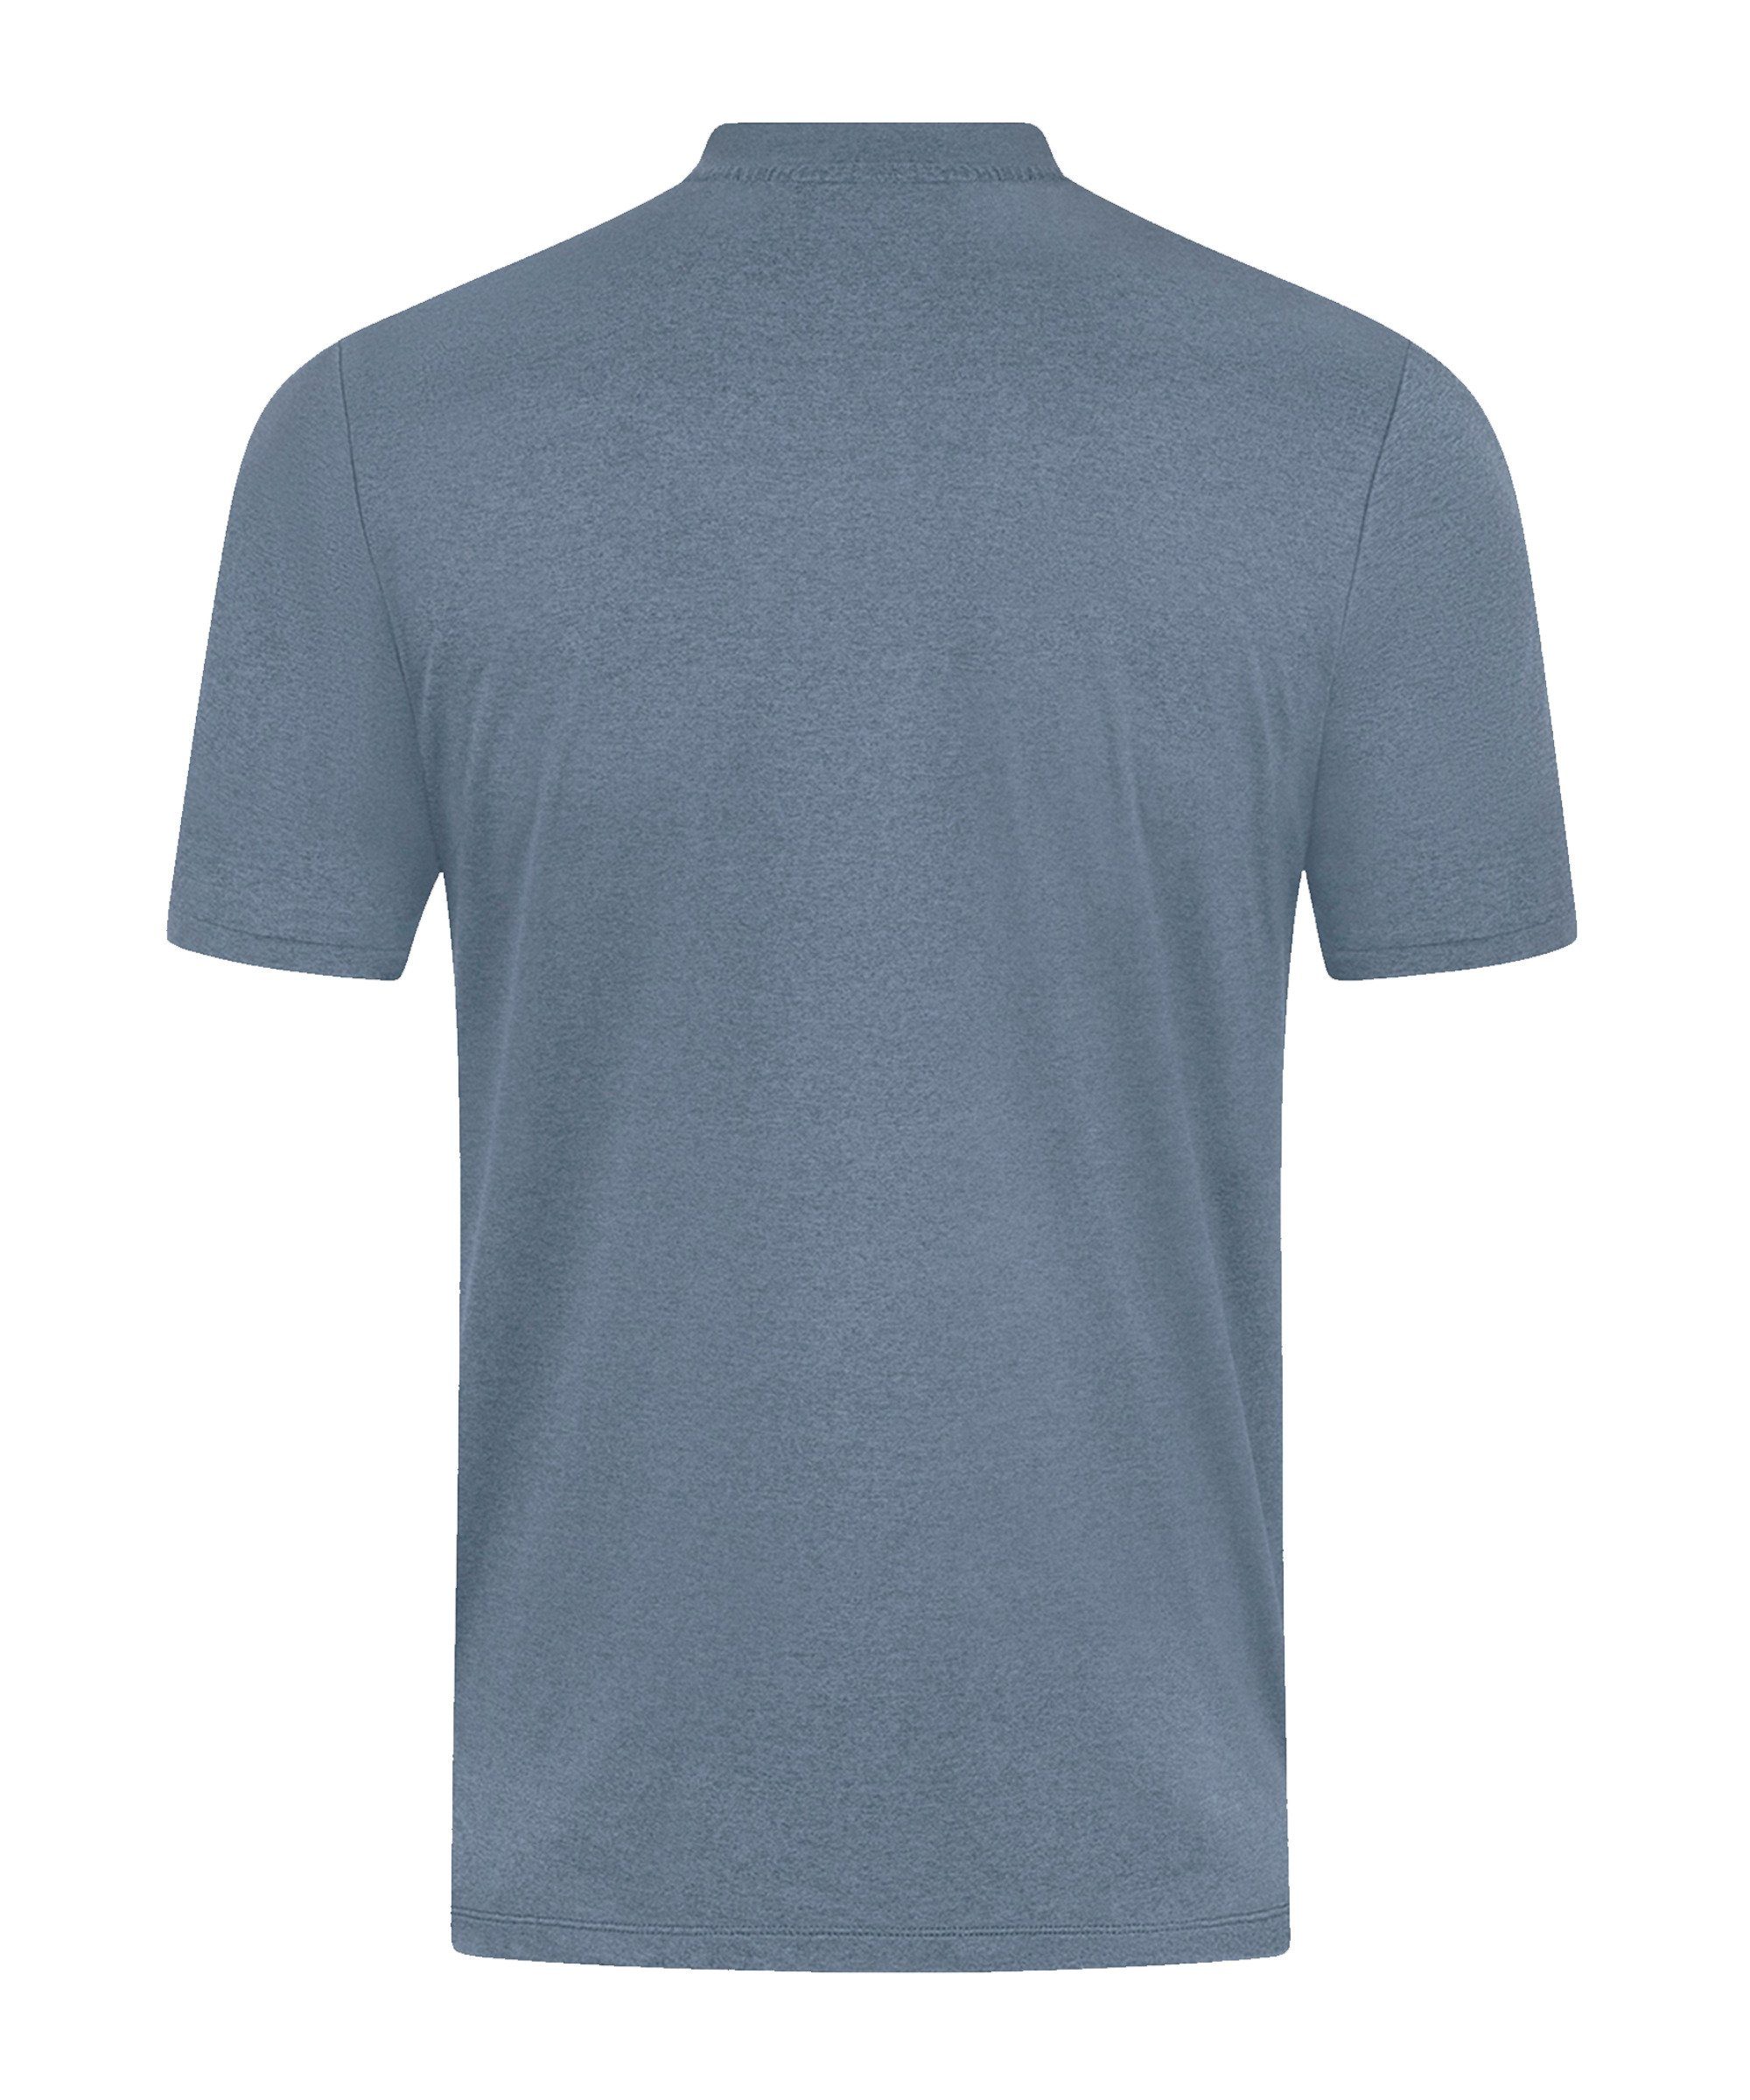 Jako T-Shirt Pro default Poloshirt blau Casual